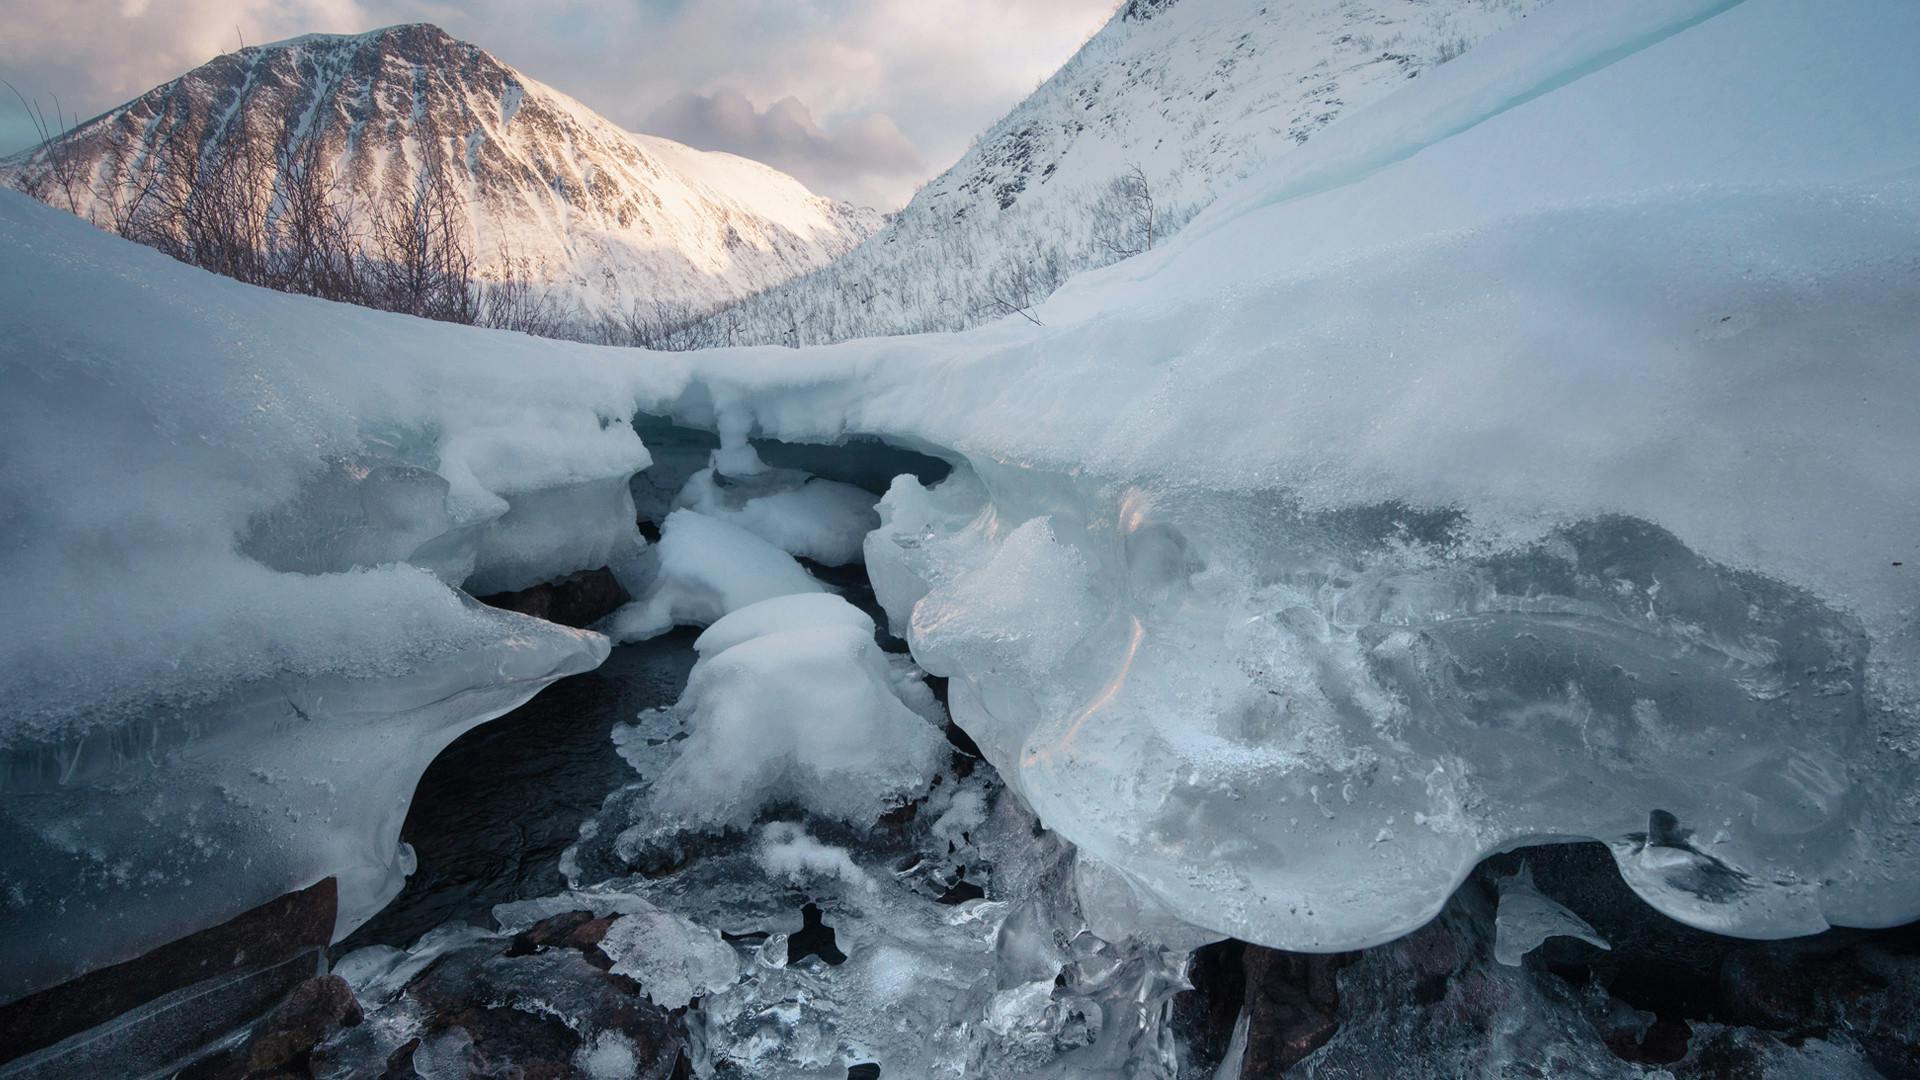 Arctic_landscapes_Wandering_Owl_frozen_landscape.jpg